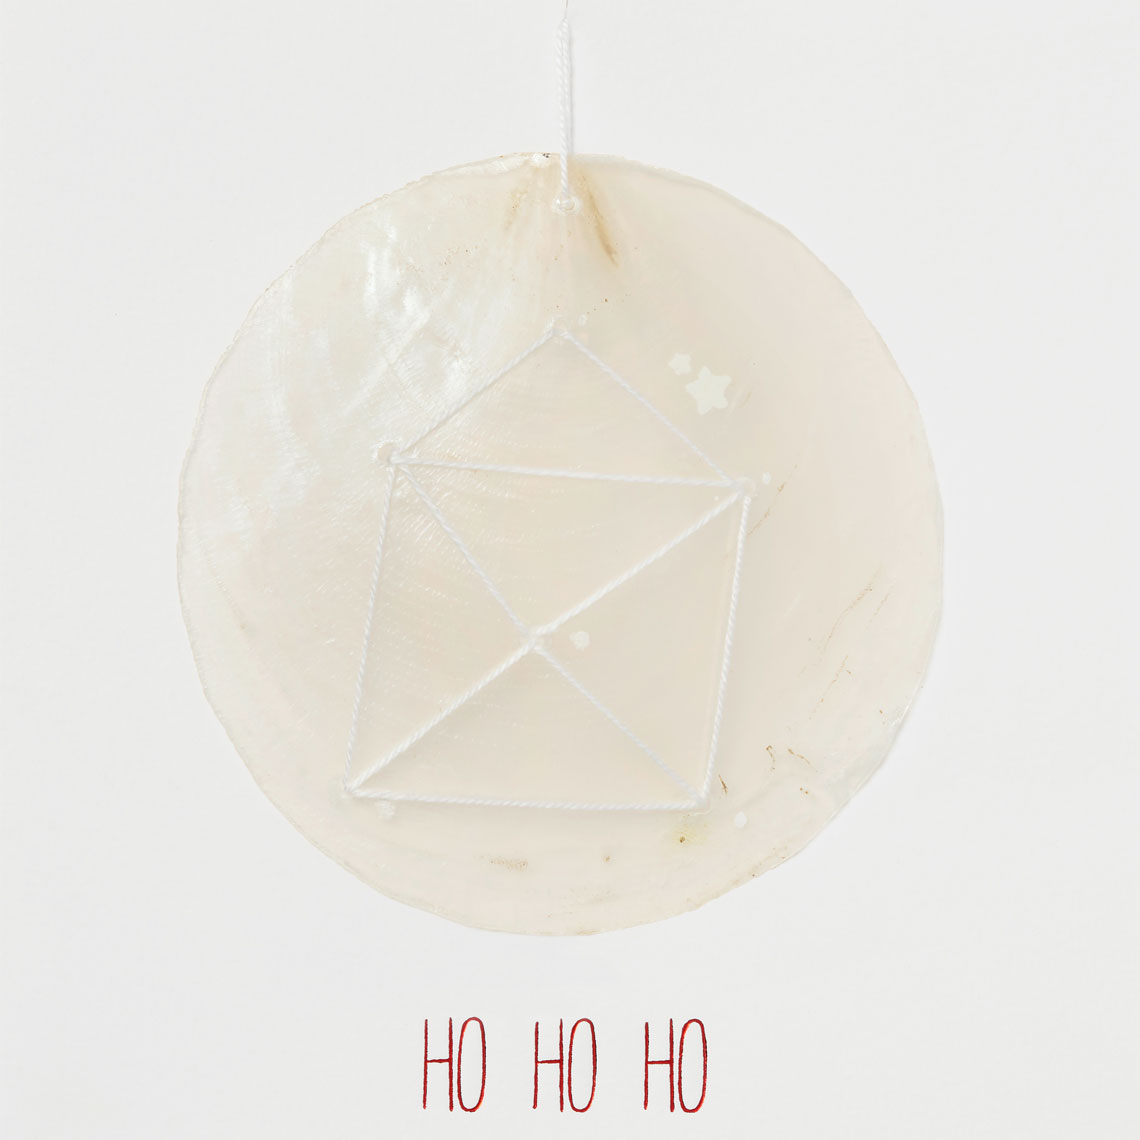 Weihnachts Capizkarte "Ho Ho Ho" 